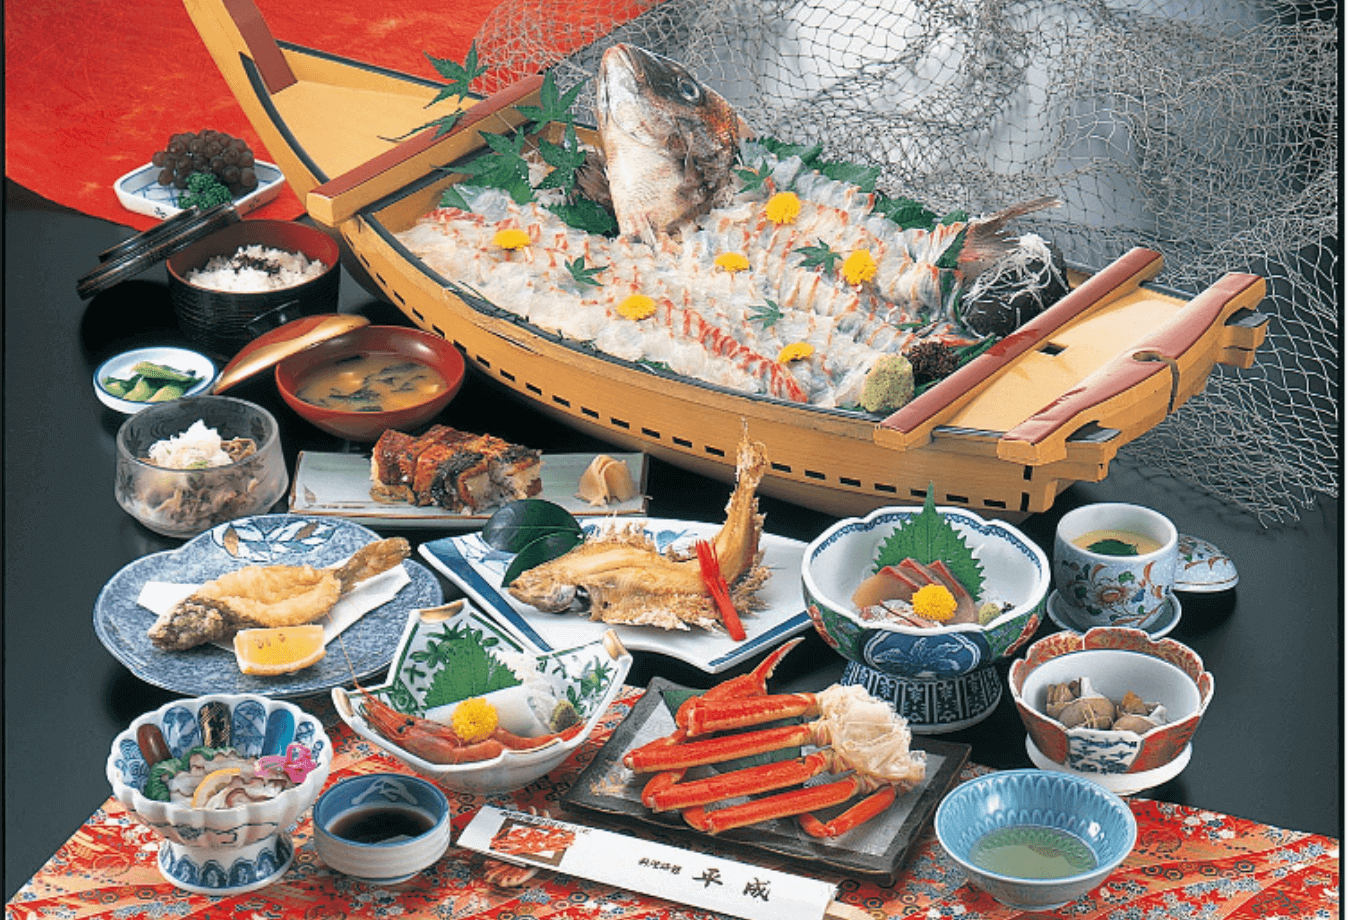 Ｆコース・越前海岸“料理旅館平成”にて昼食と陶芸村手ひねり体験